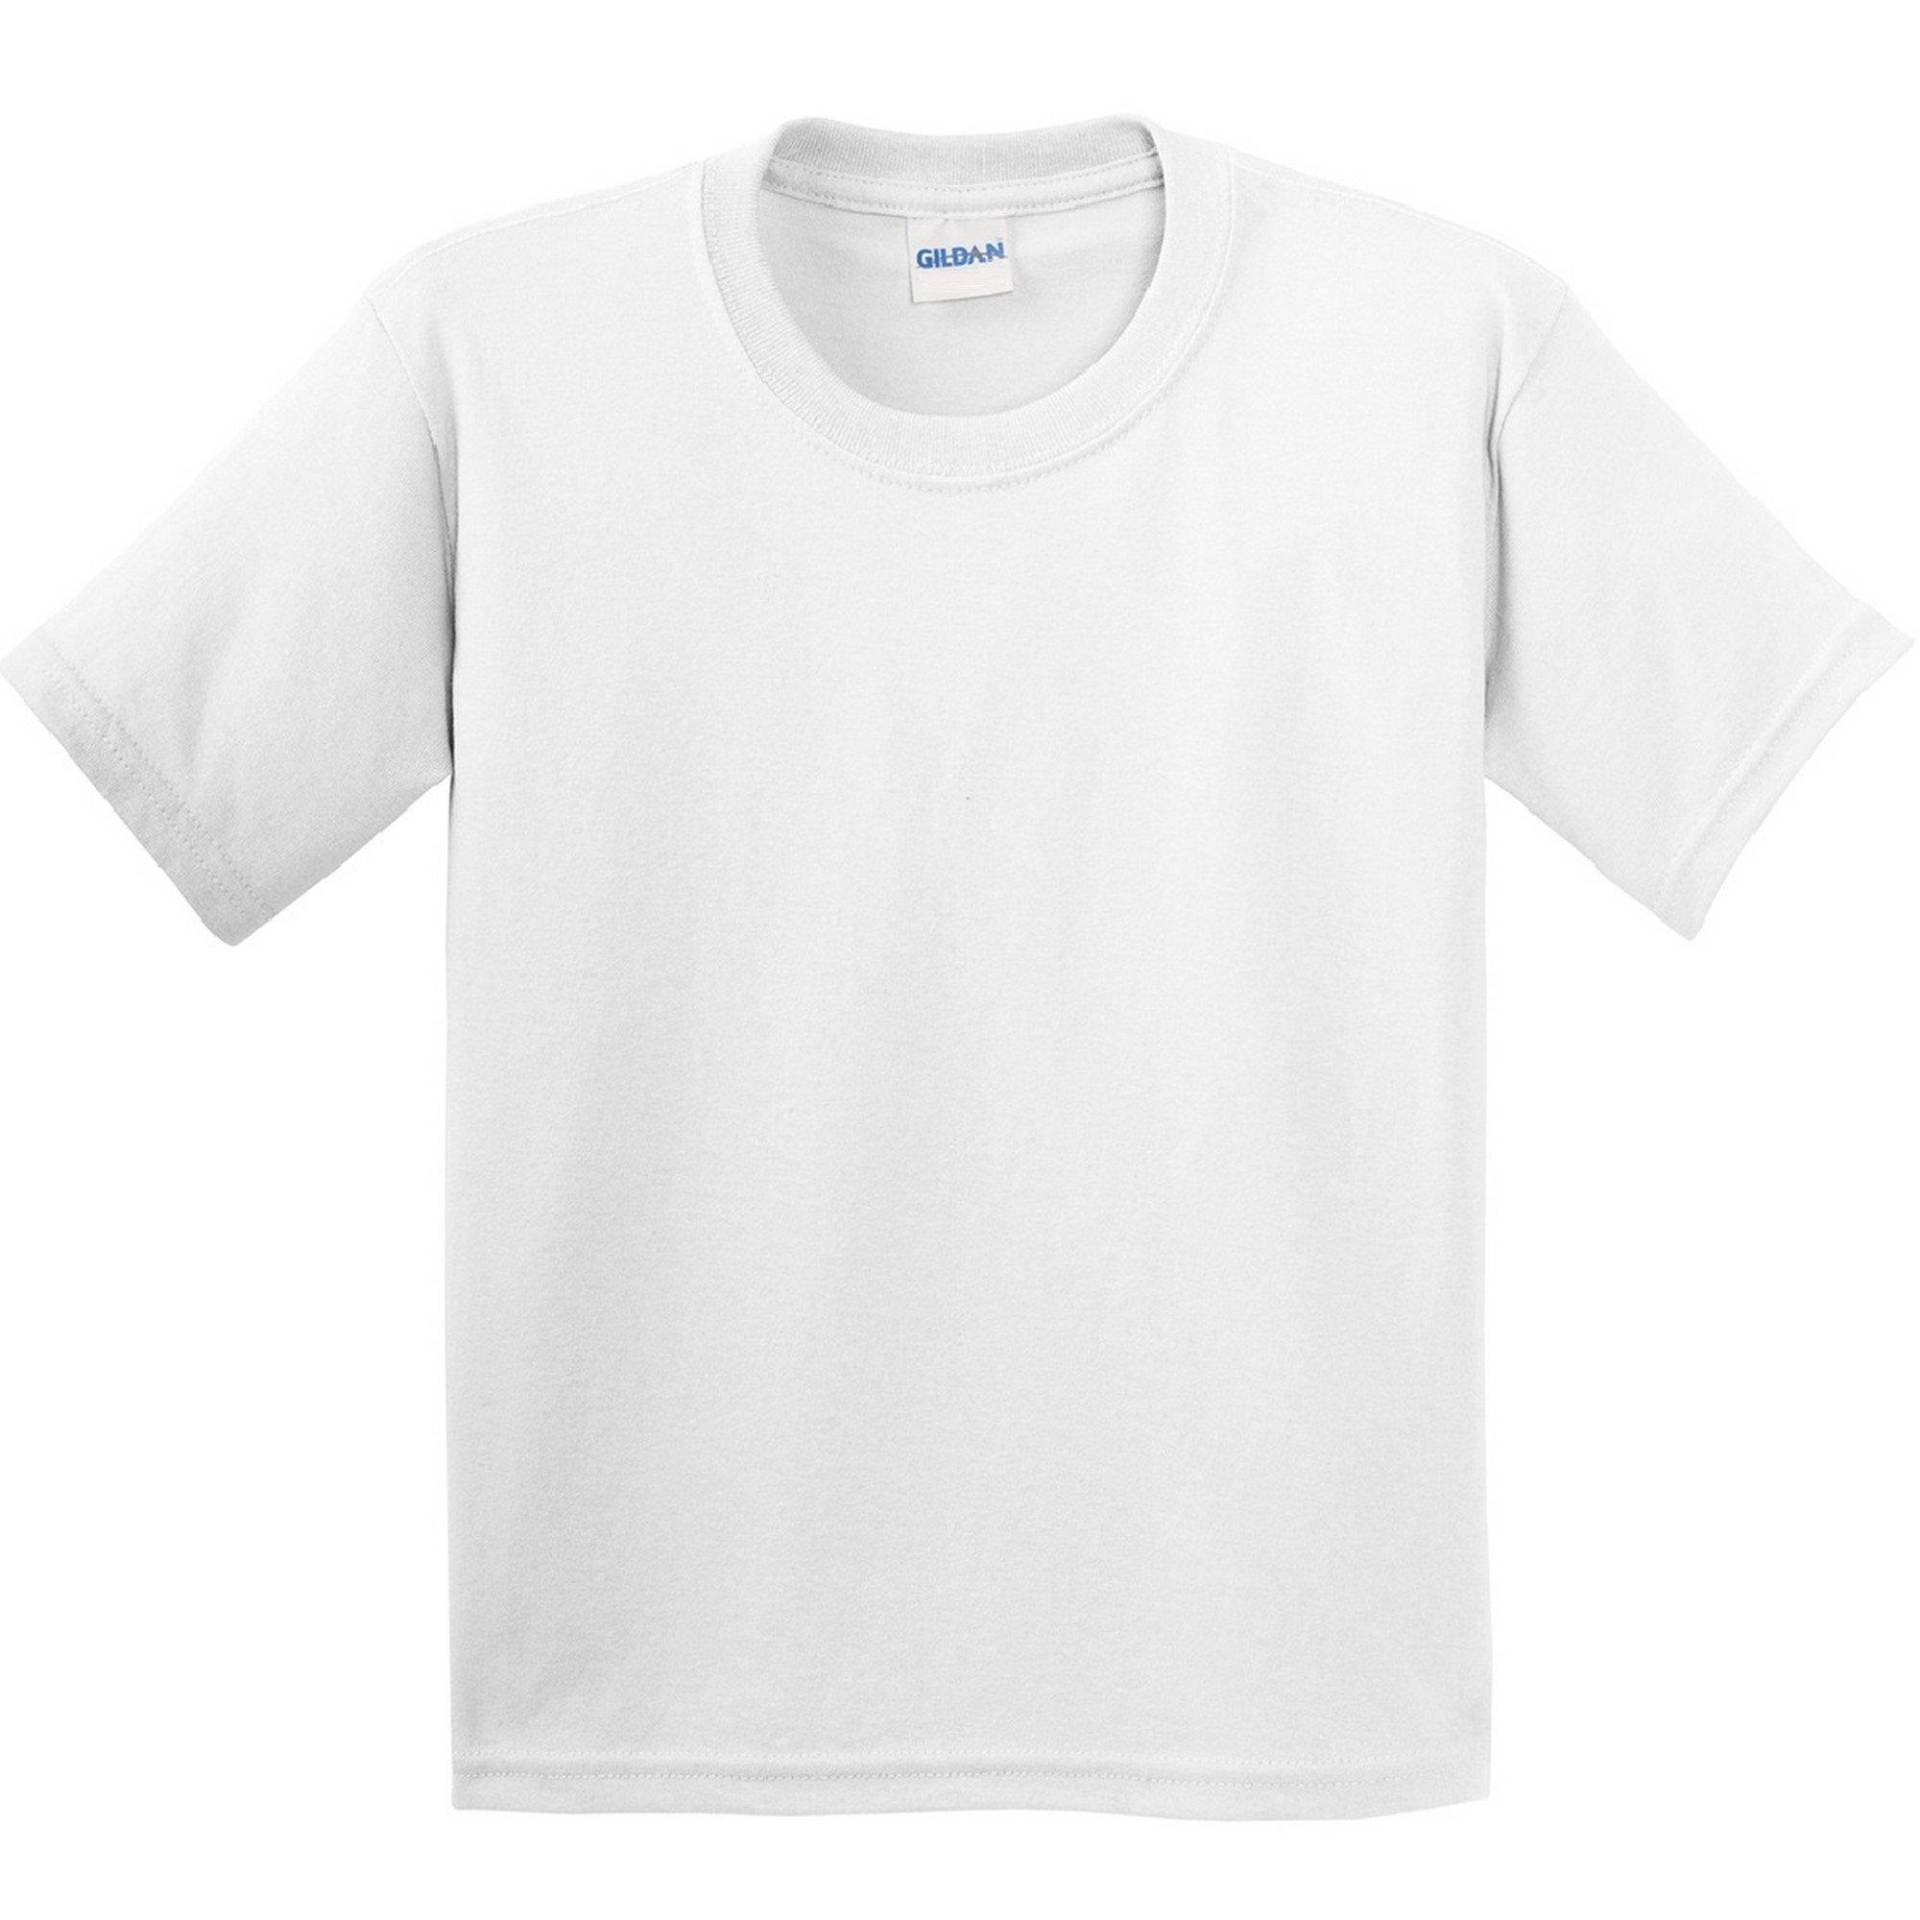 Tshirt (2 Stückpackung) Jungen Weiss XS von Gildan